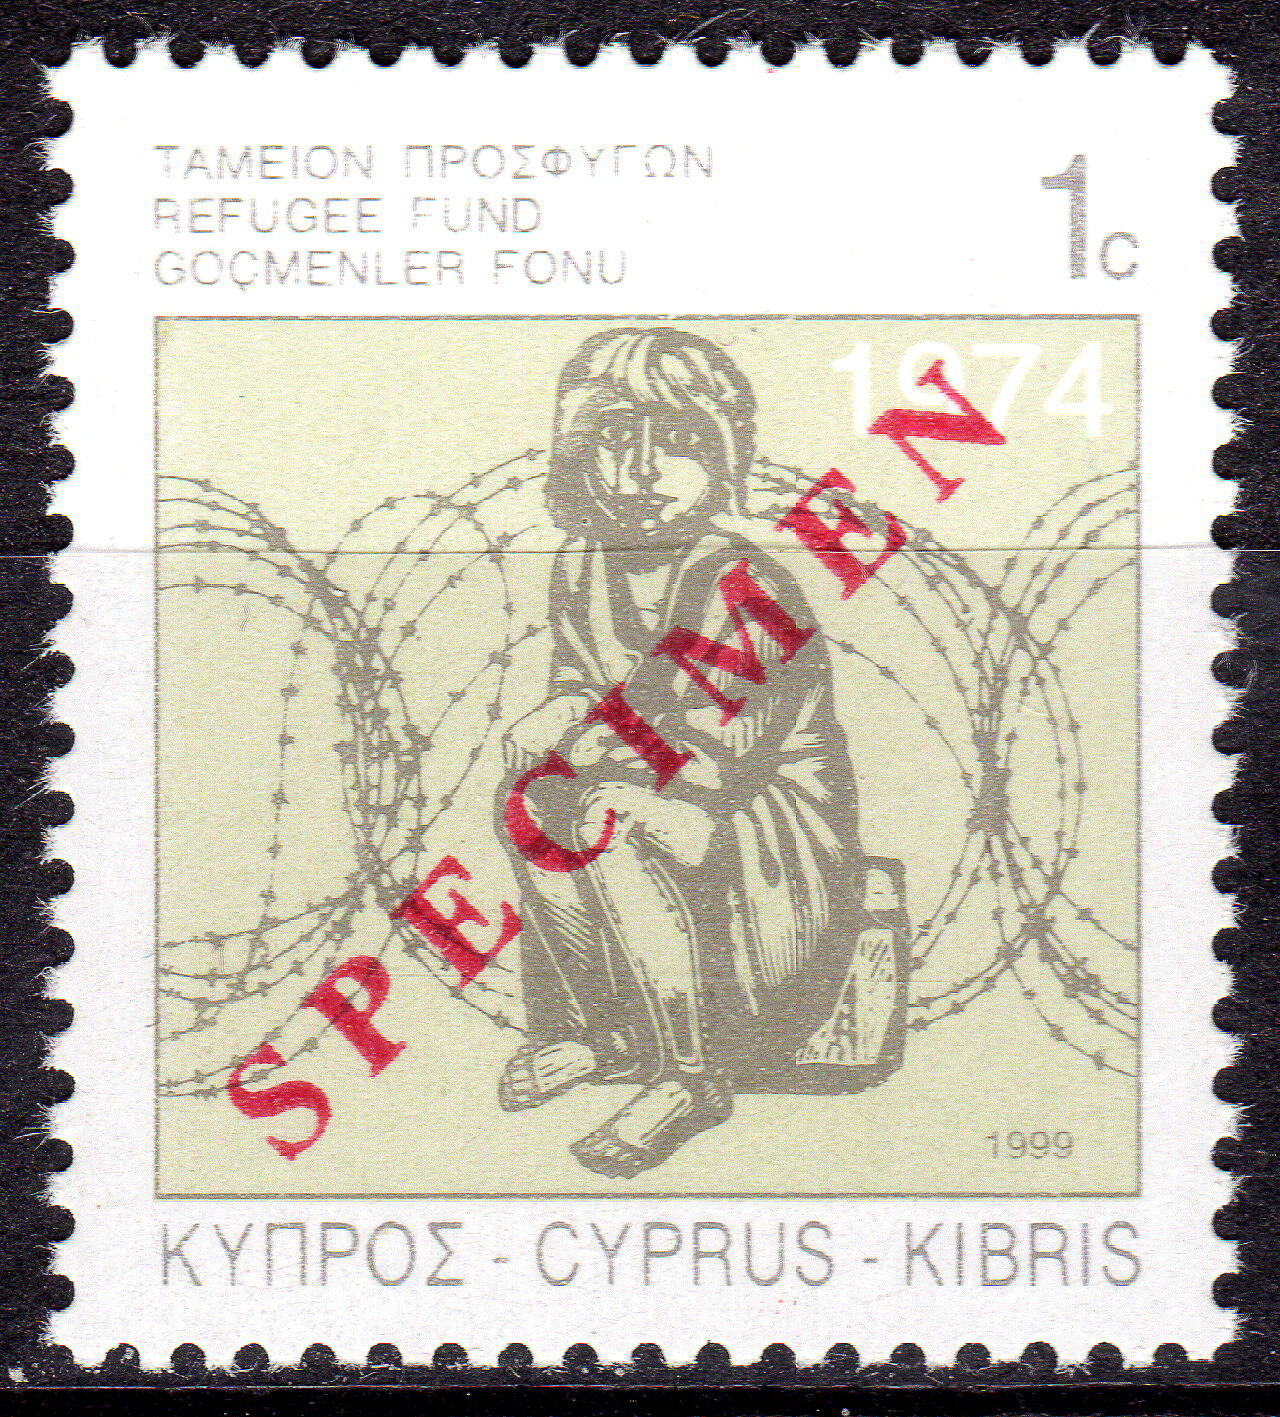 Cyprus 1999 Special Refugee Fund Stamp - Specimen Mnh